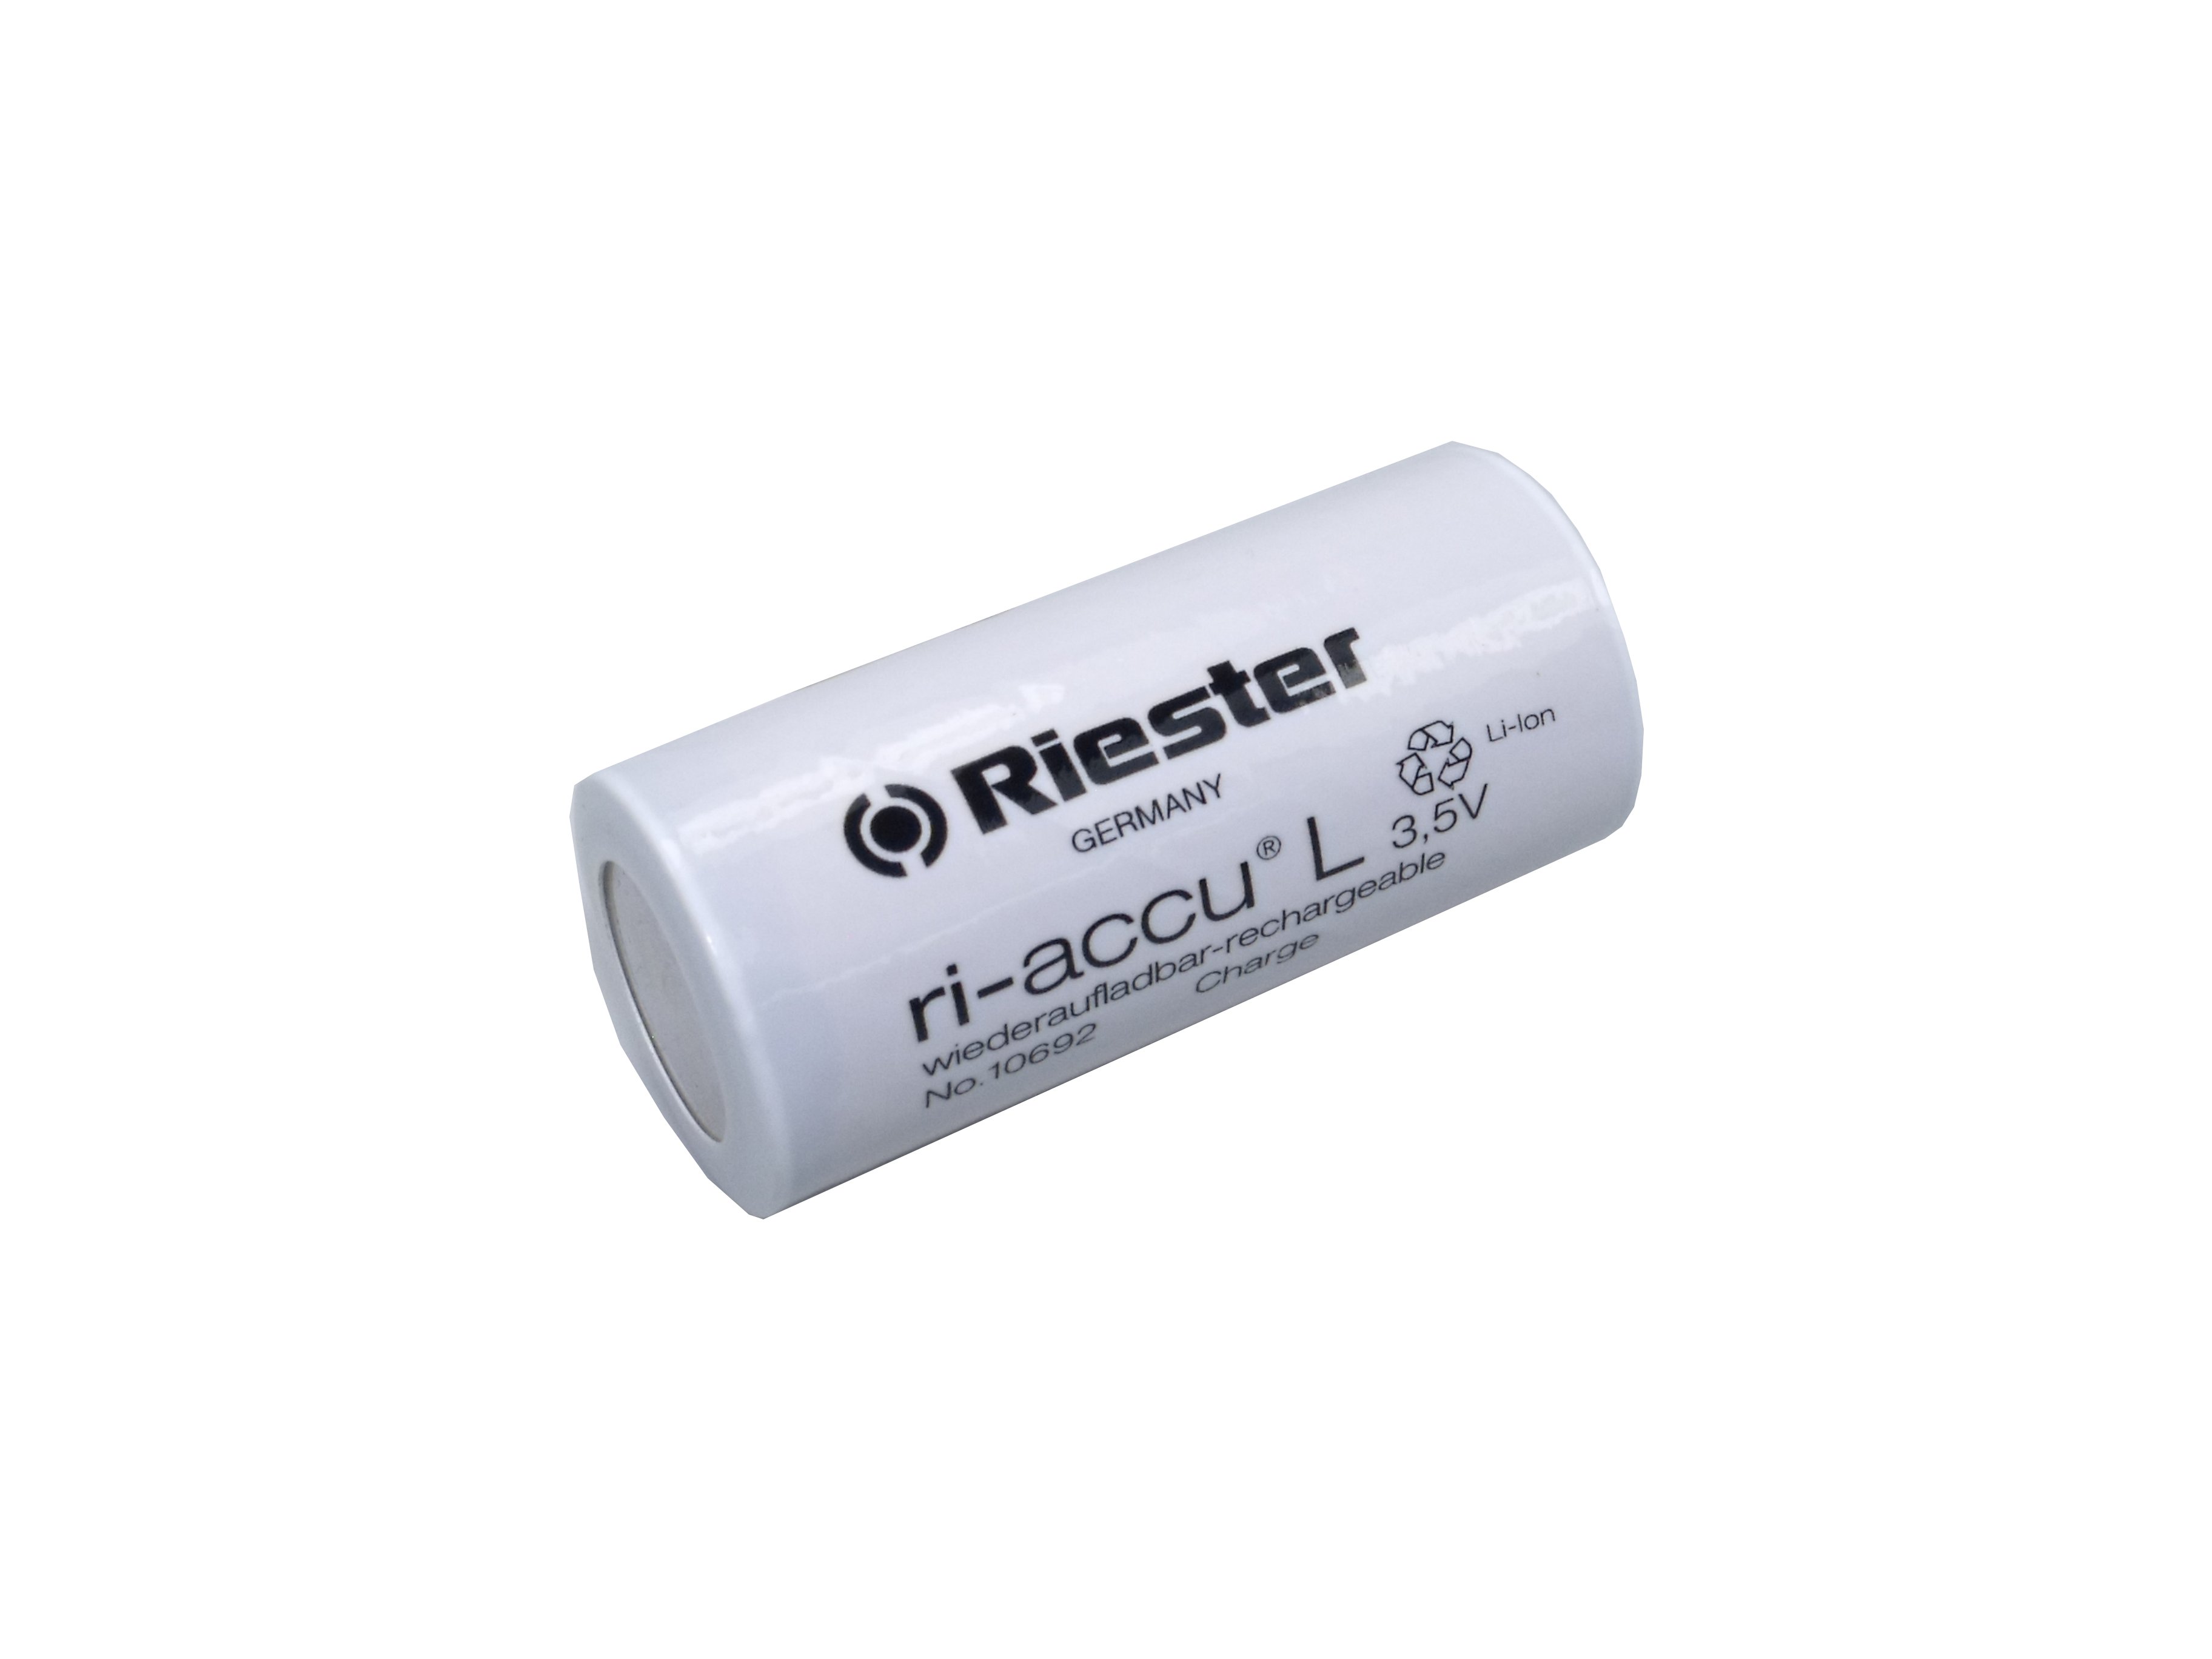 Original Li Ion battery for Riester ri-accu L socket grip type C 10692